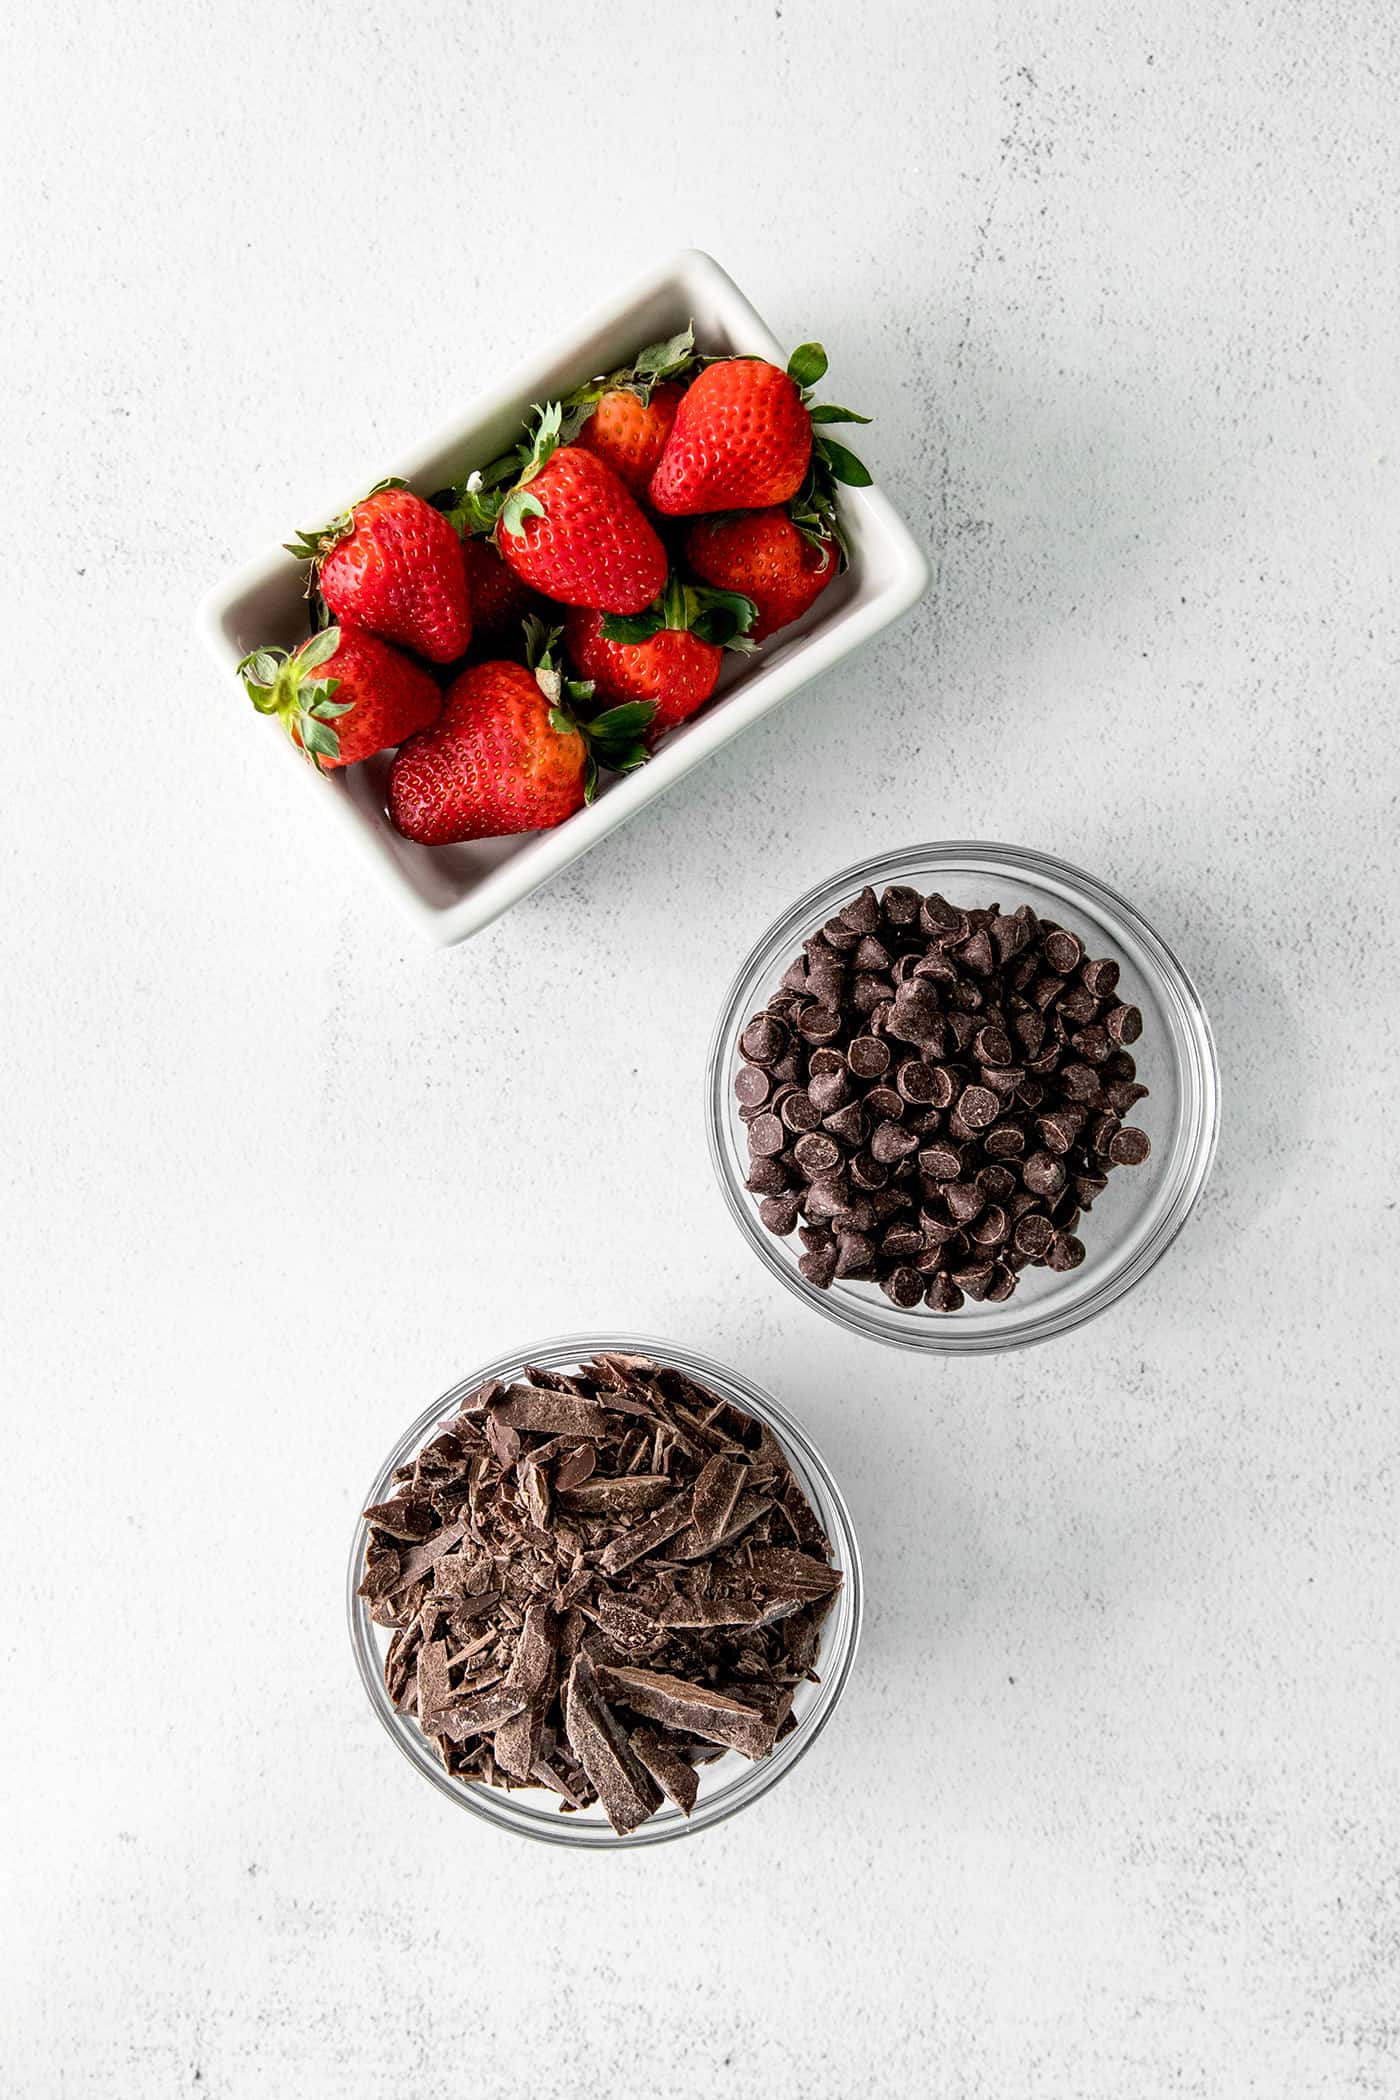 Chocolate covered strawberries ingredients